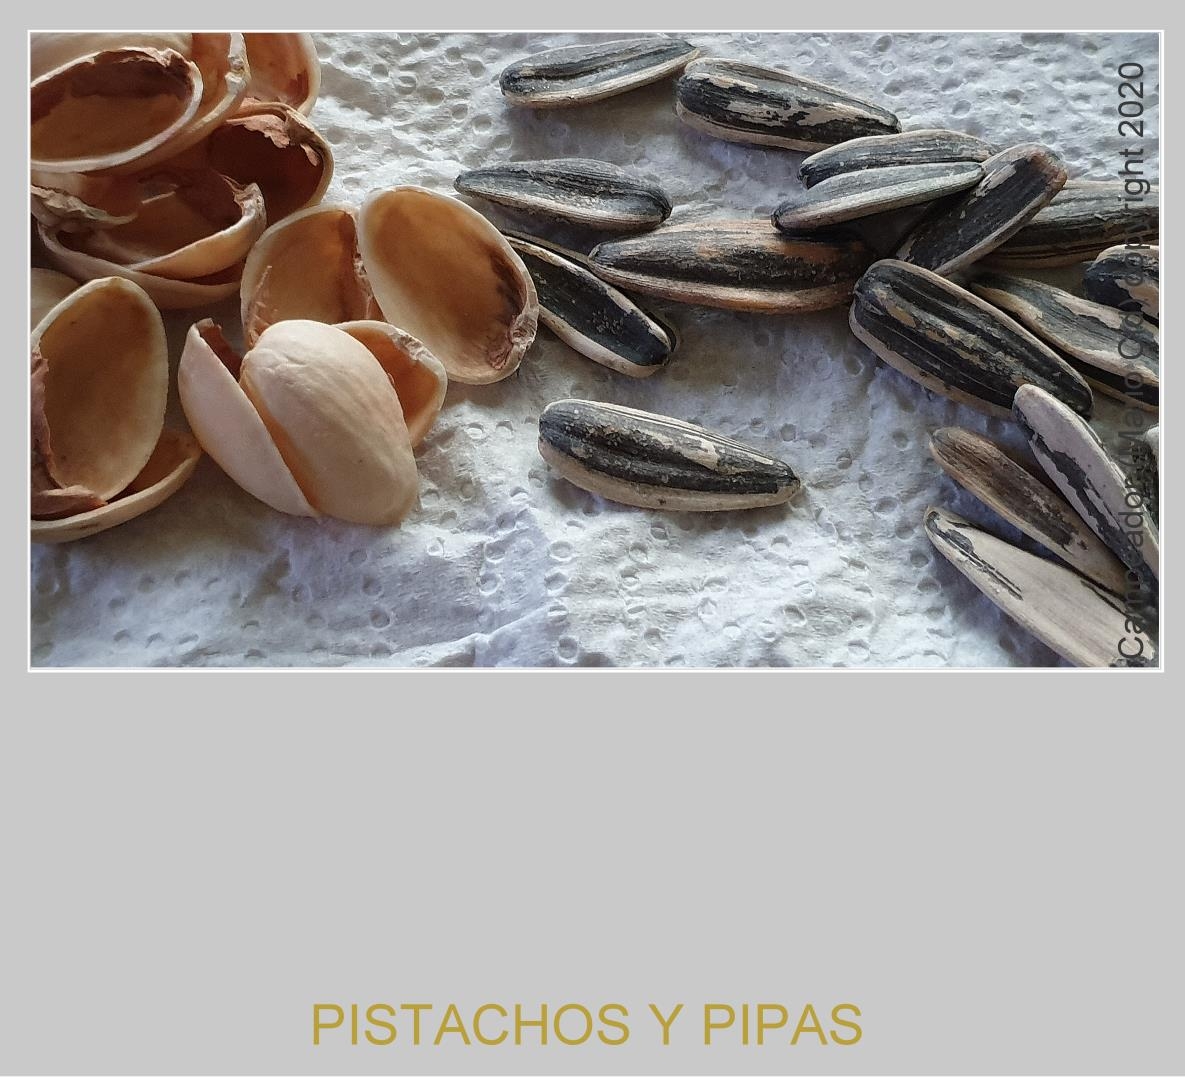 Pistachos y pipas - Pistachios and sunflower seeds. Photo by Campeador (Mario Cid).